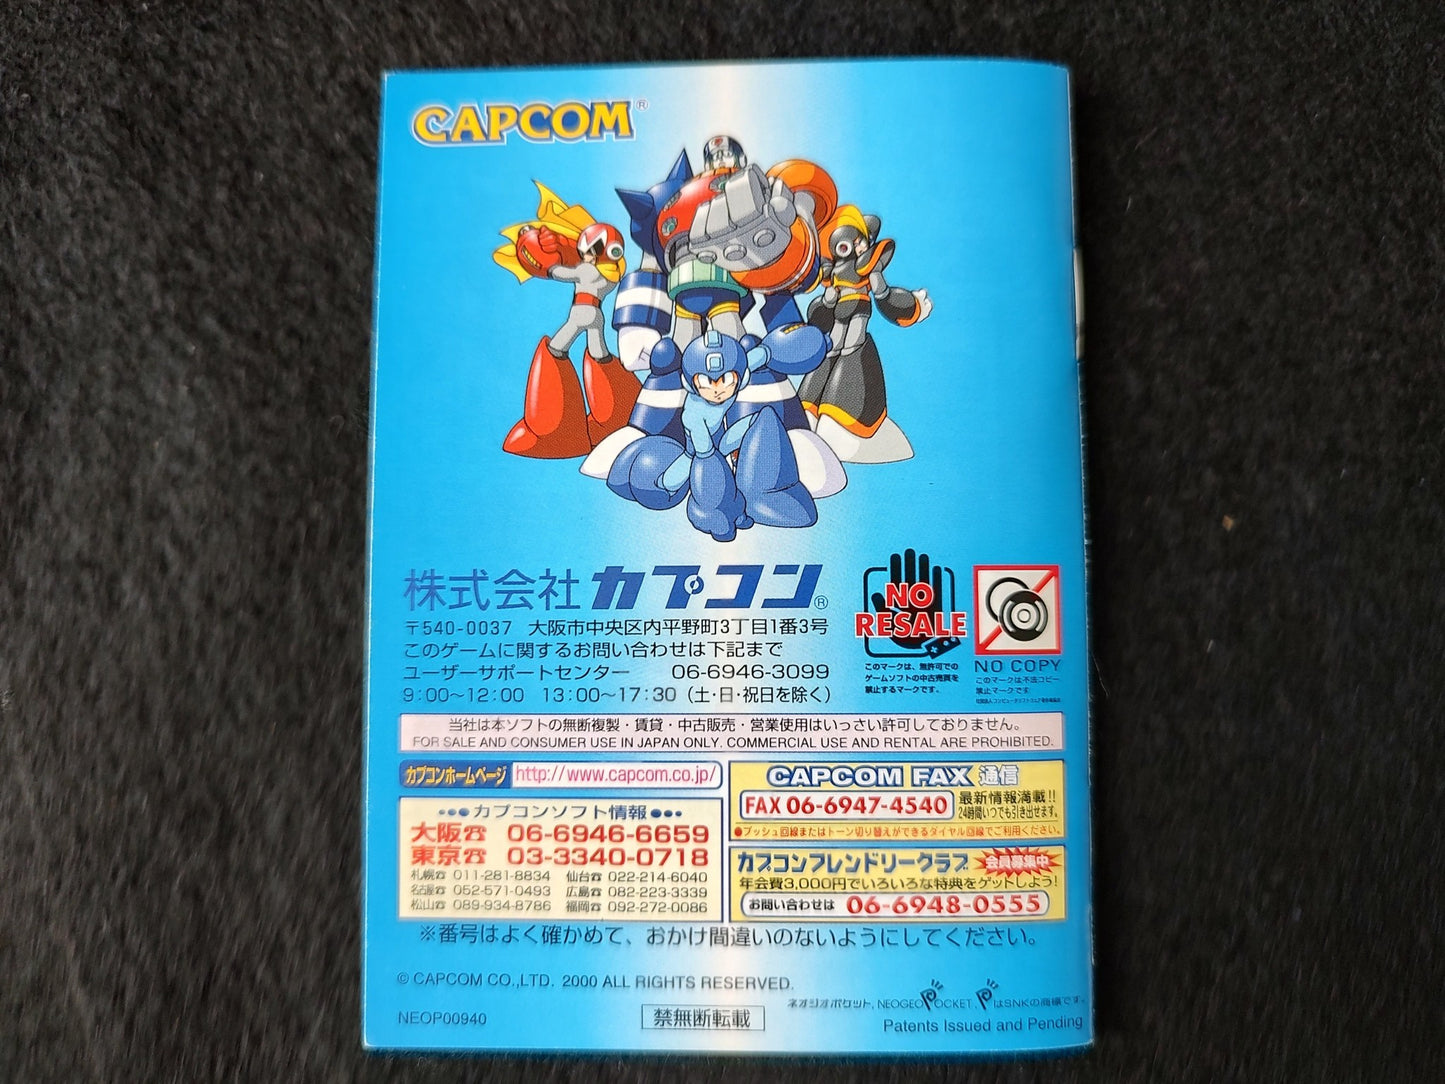 Rockman (MEGAMAN) Battle and Fighters NEOGEO Pocket NGP Cart,Manual,Boxed-f0525-